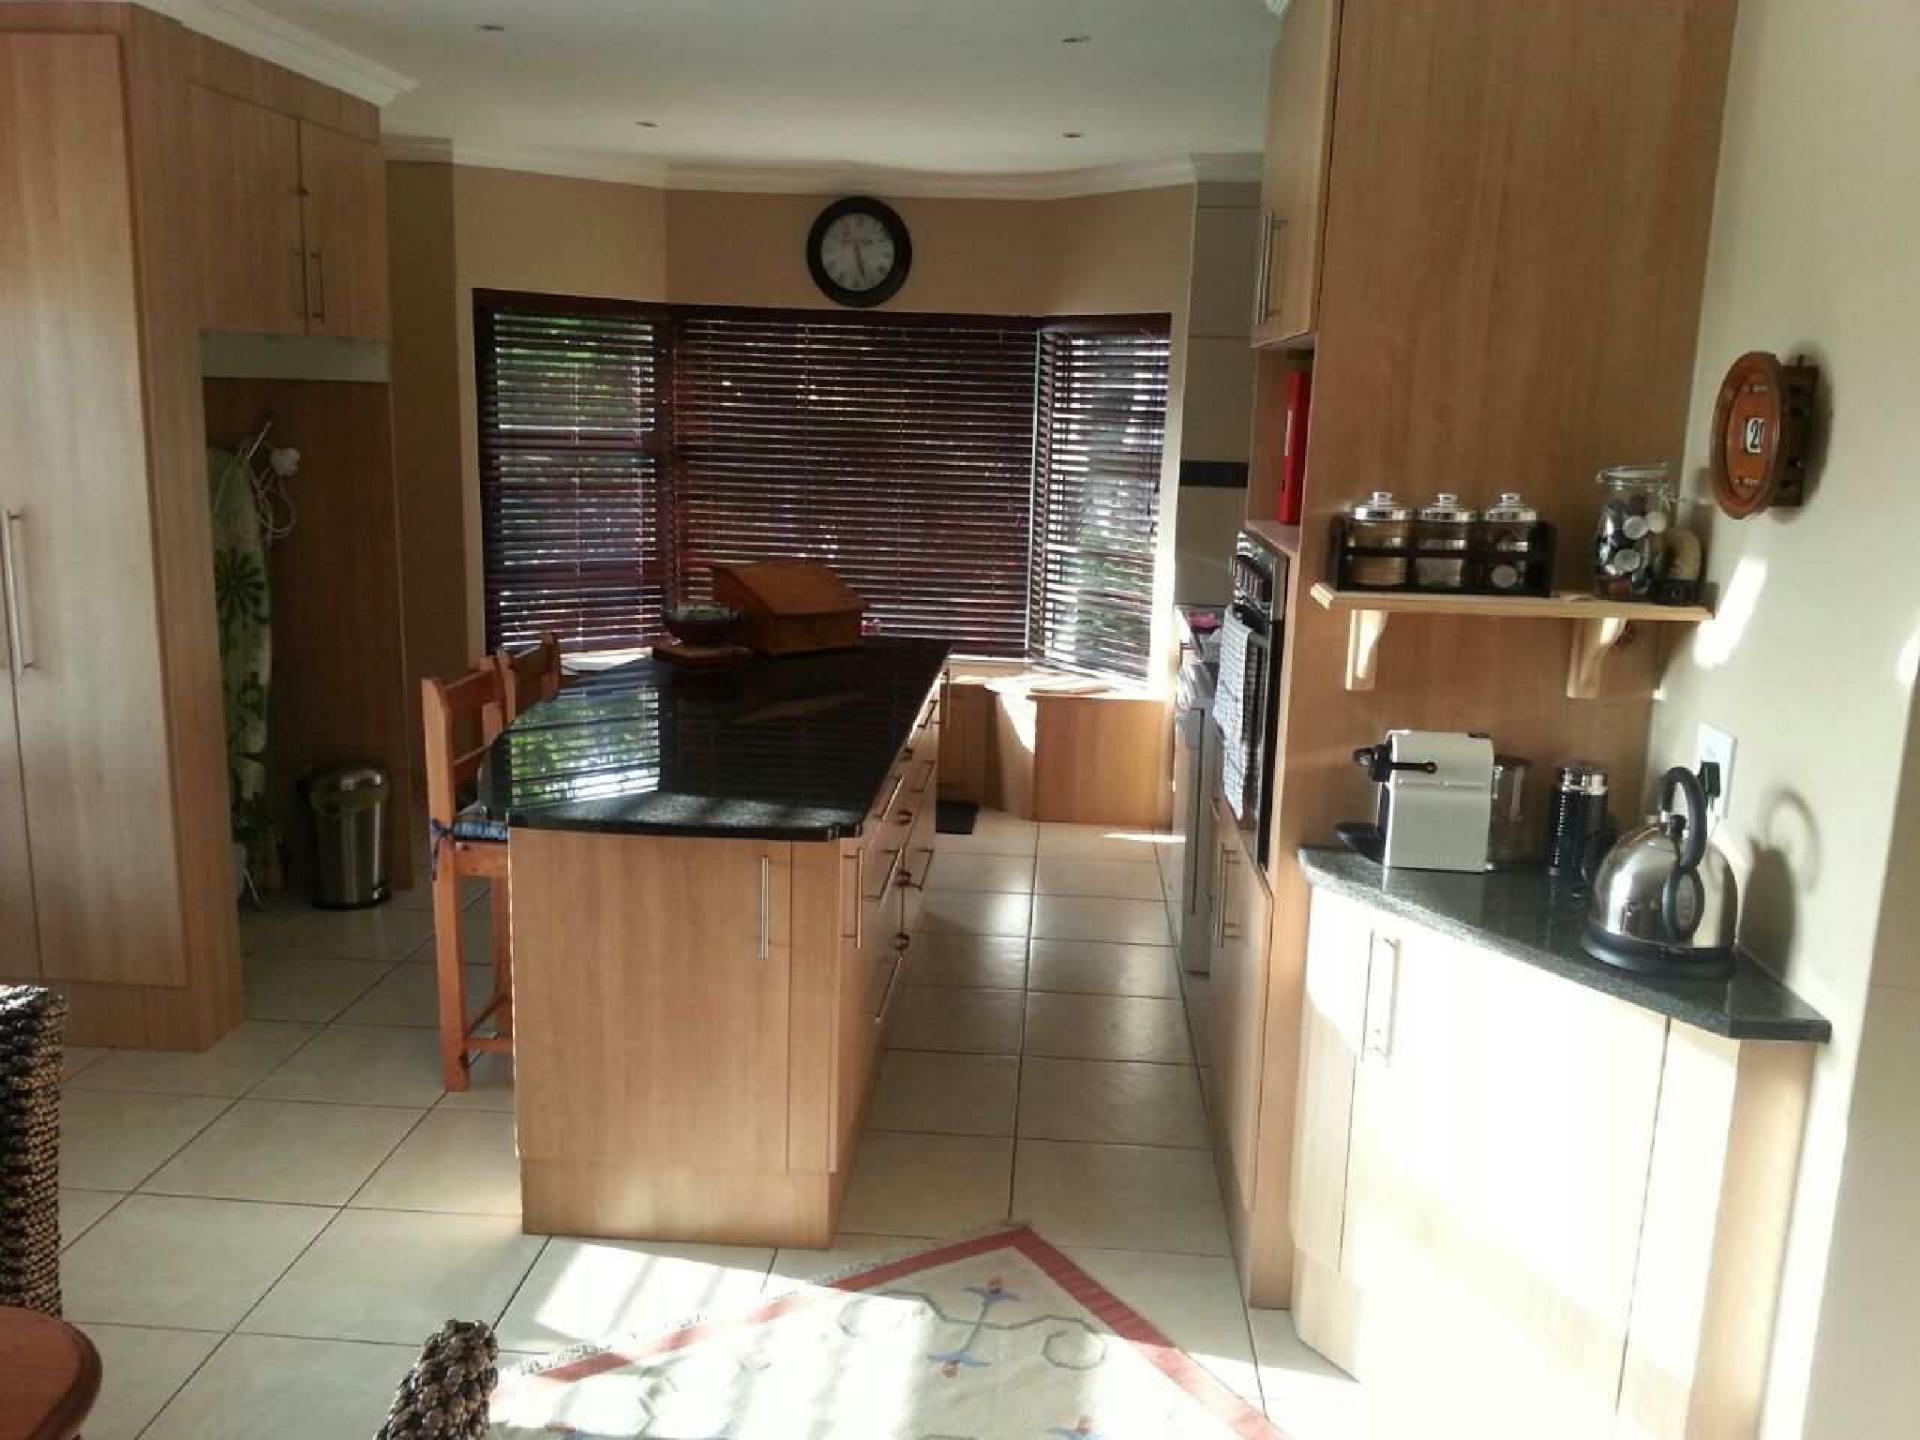 Kitchen - 26 square meters of property in Groot Brakrivier